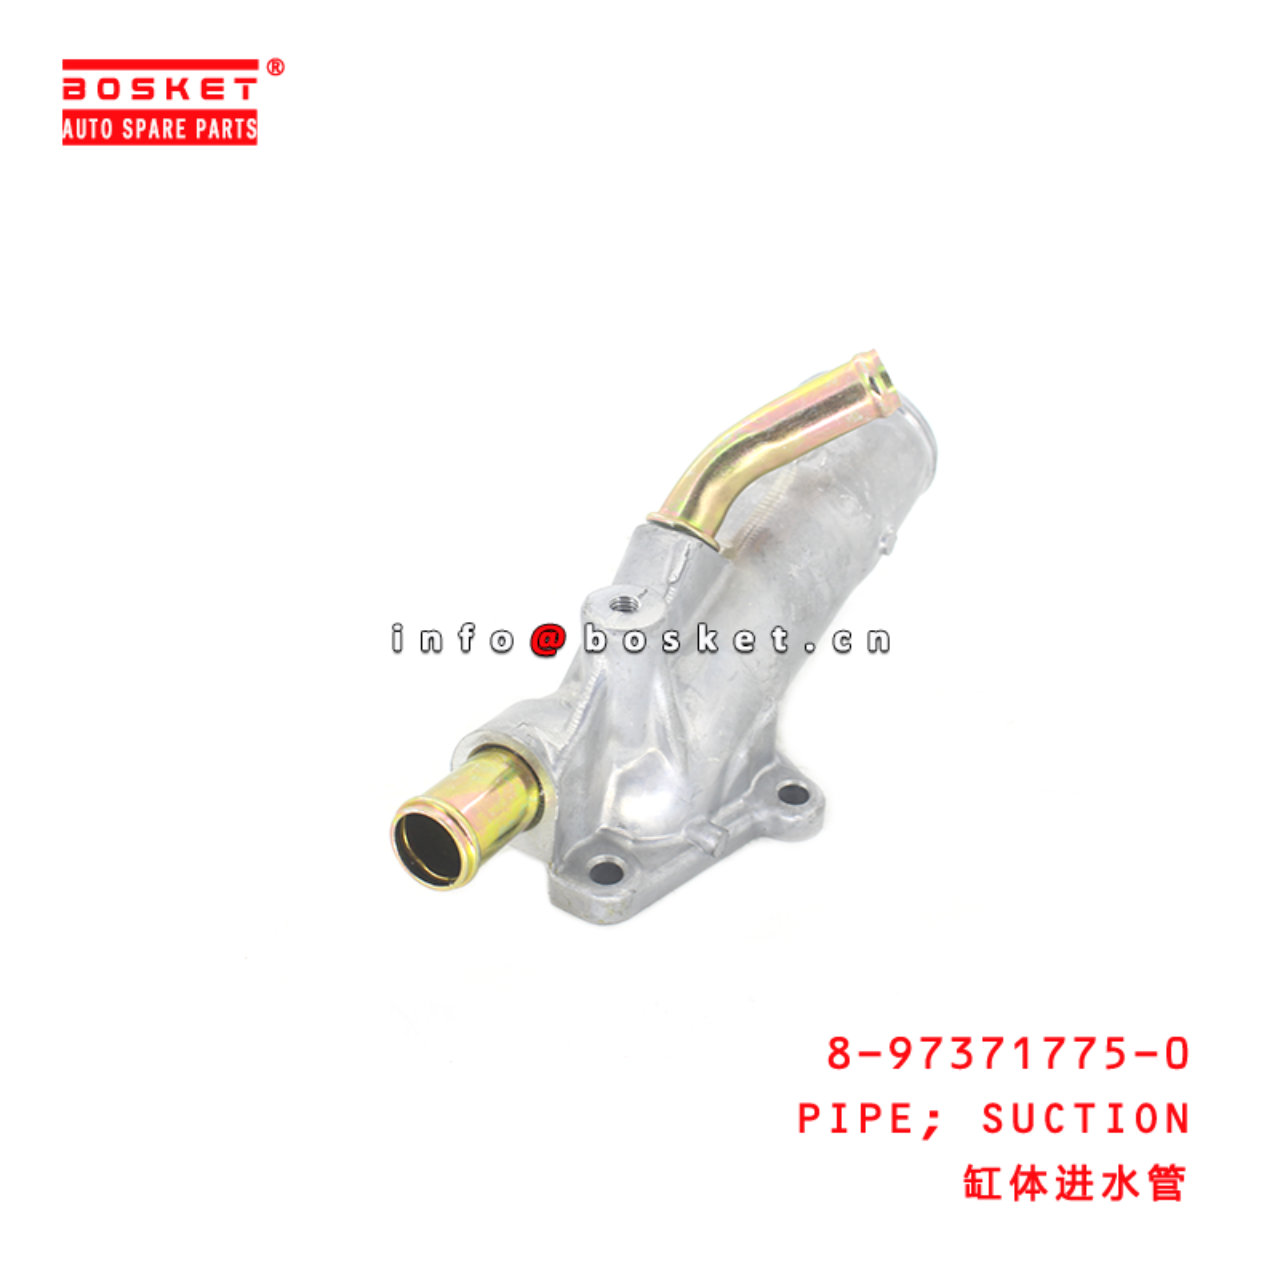 8-97371775-0 Suction Pipe 8973717750 Suitable for ISUZU 700P 4HK1